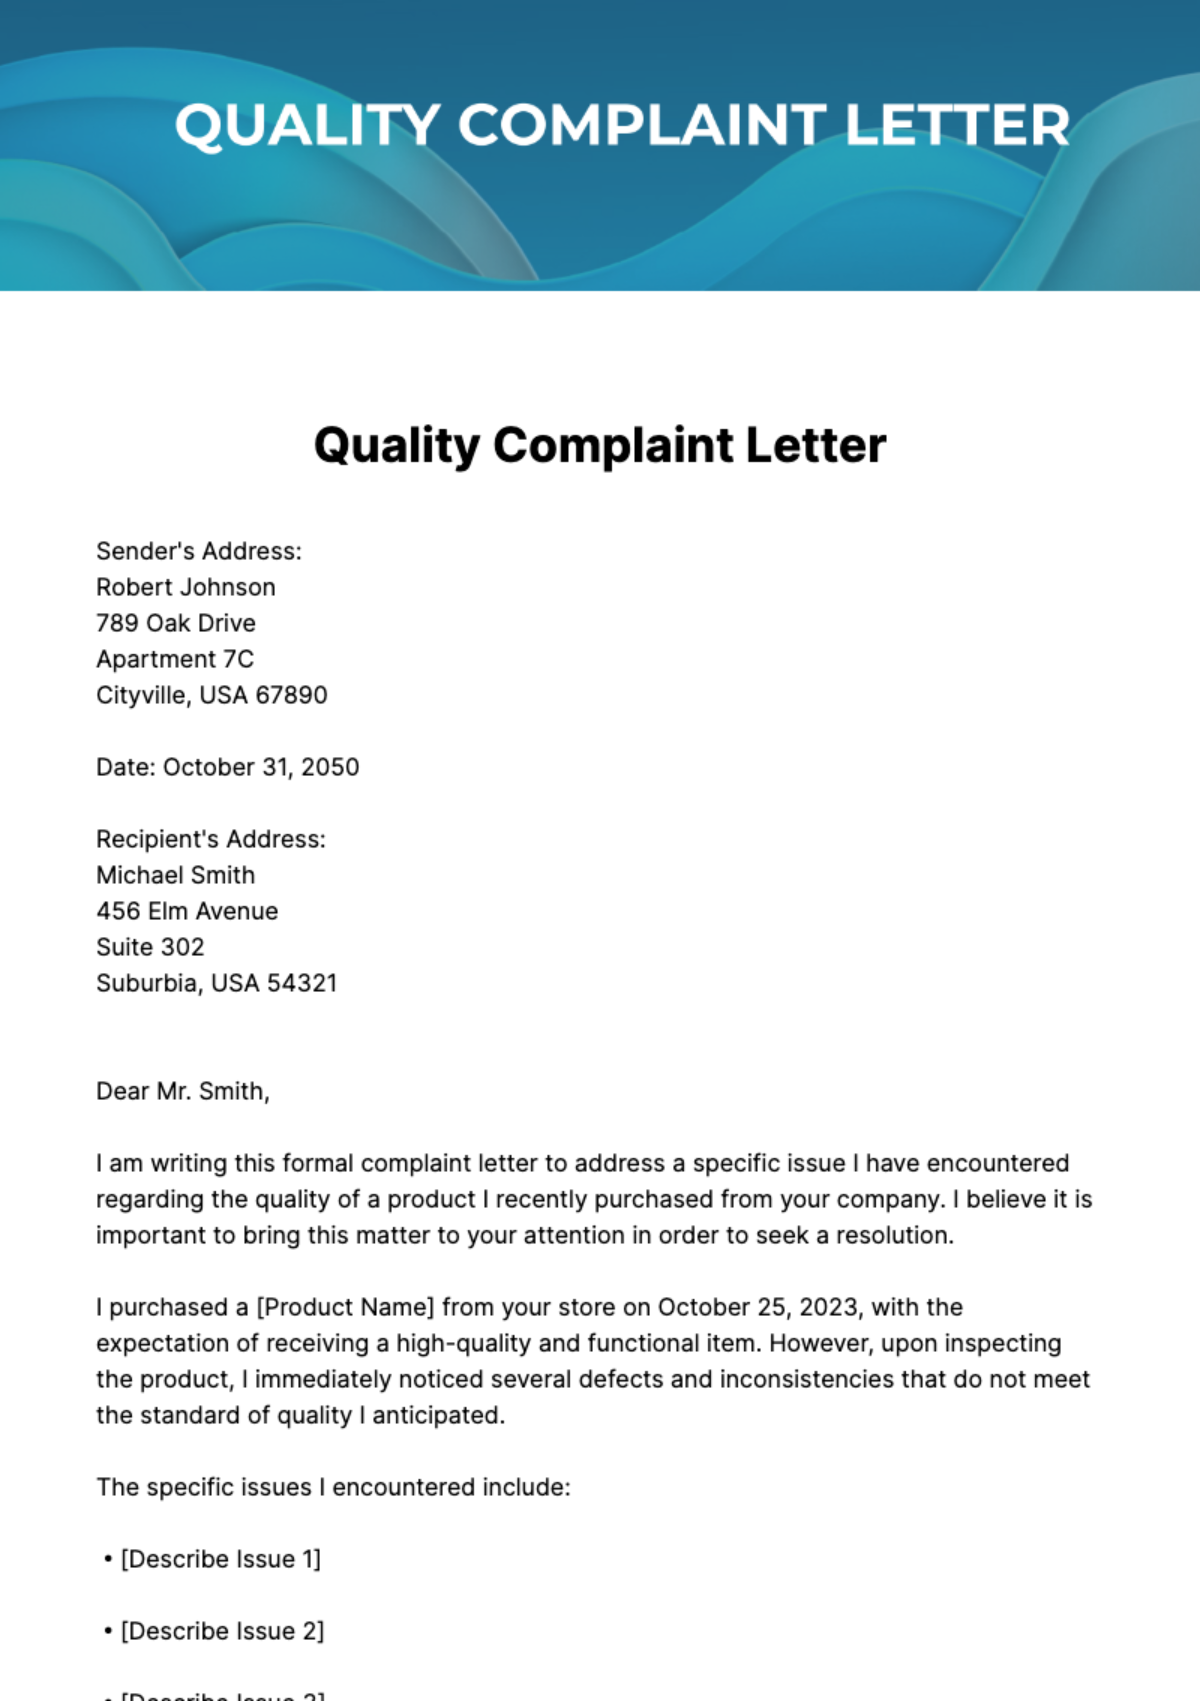 Quality Complaint Letter Template